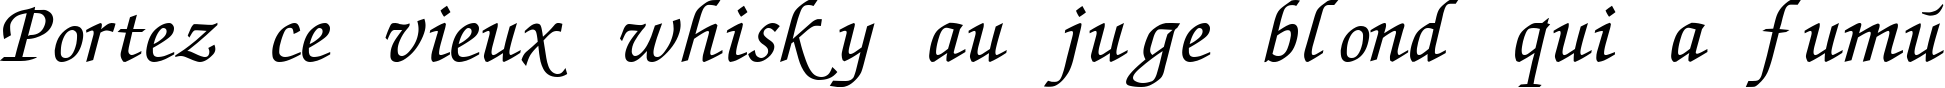 Пример написания шрифтом Zapf Chancery Italic:001.007 текста на французском